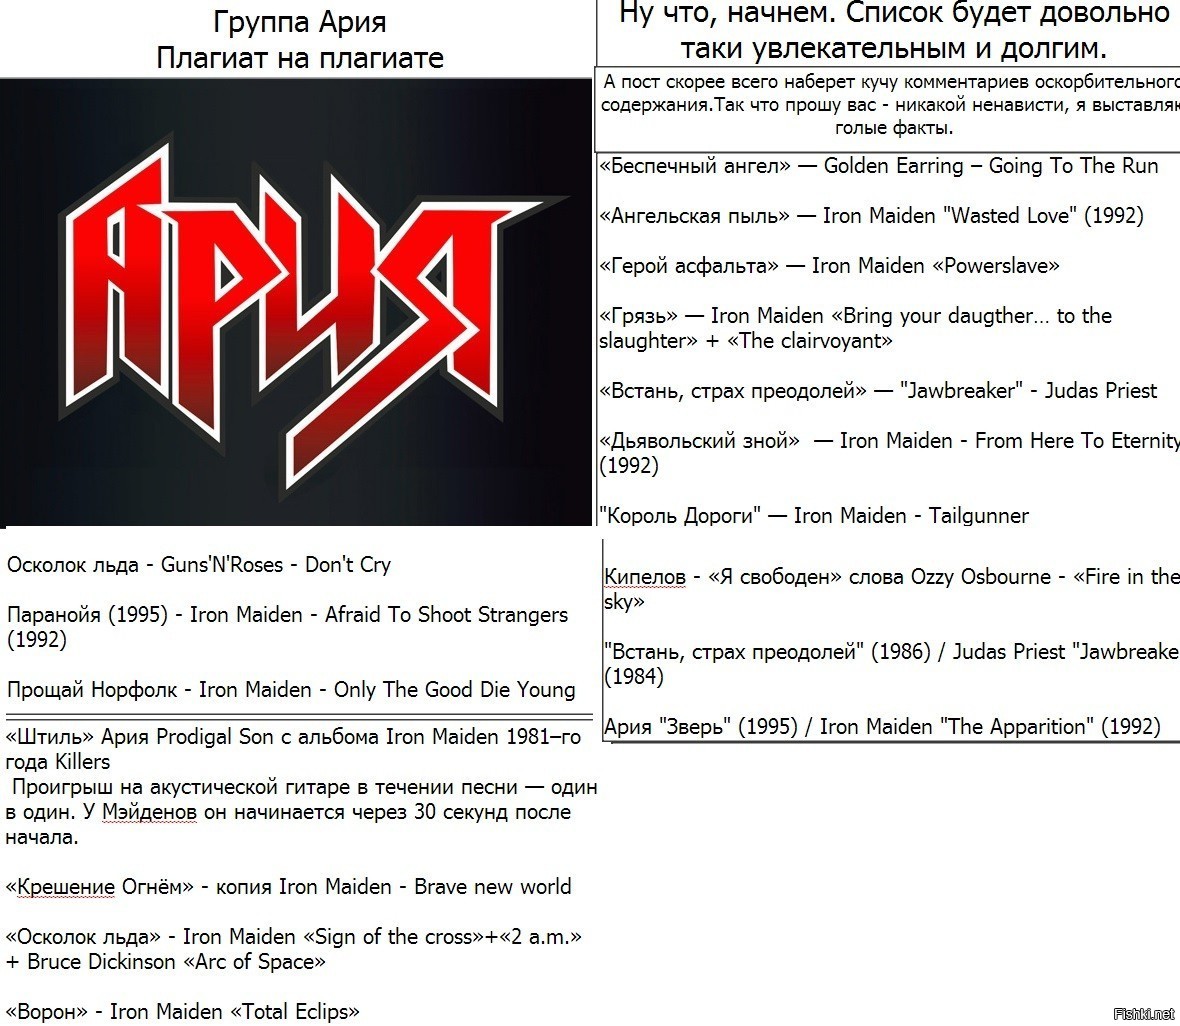 Ария текст огню. Группа Ария 1980. Ария и Iron Maiden. Ария плагиат Iron Maiden. Значок группы Ария.